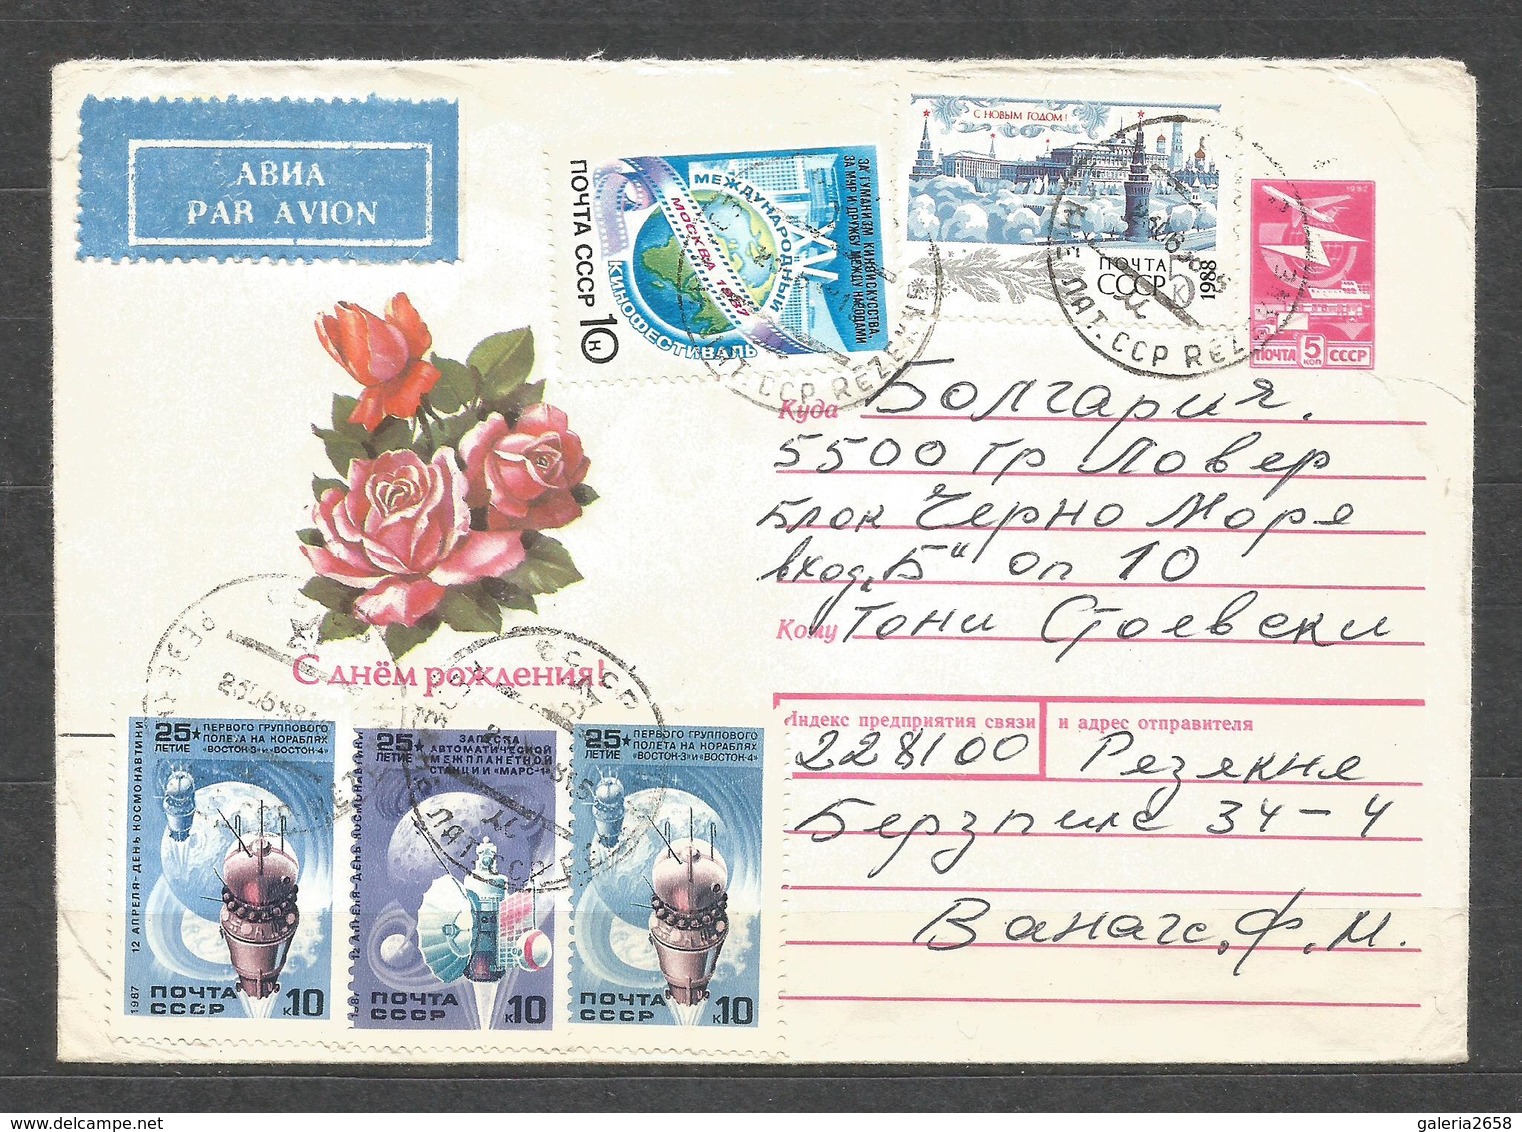 LATVIJA - REZEKNE  -  Traveled Letter To BULGARIA Since Communist Epoque  - D 4449 - Latvia